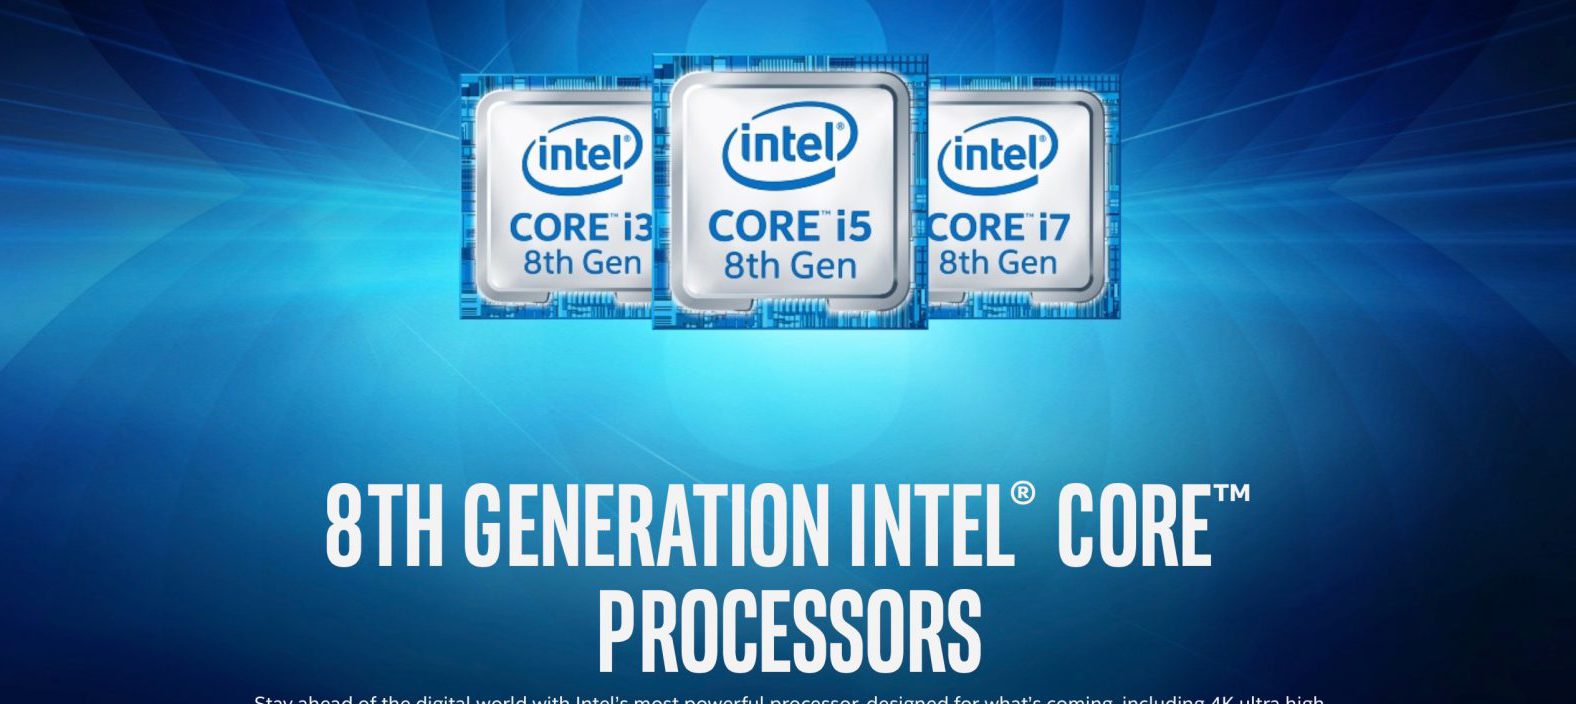 Intel 8th gen cpus coffee lake Image credit: Intel